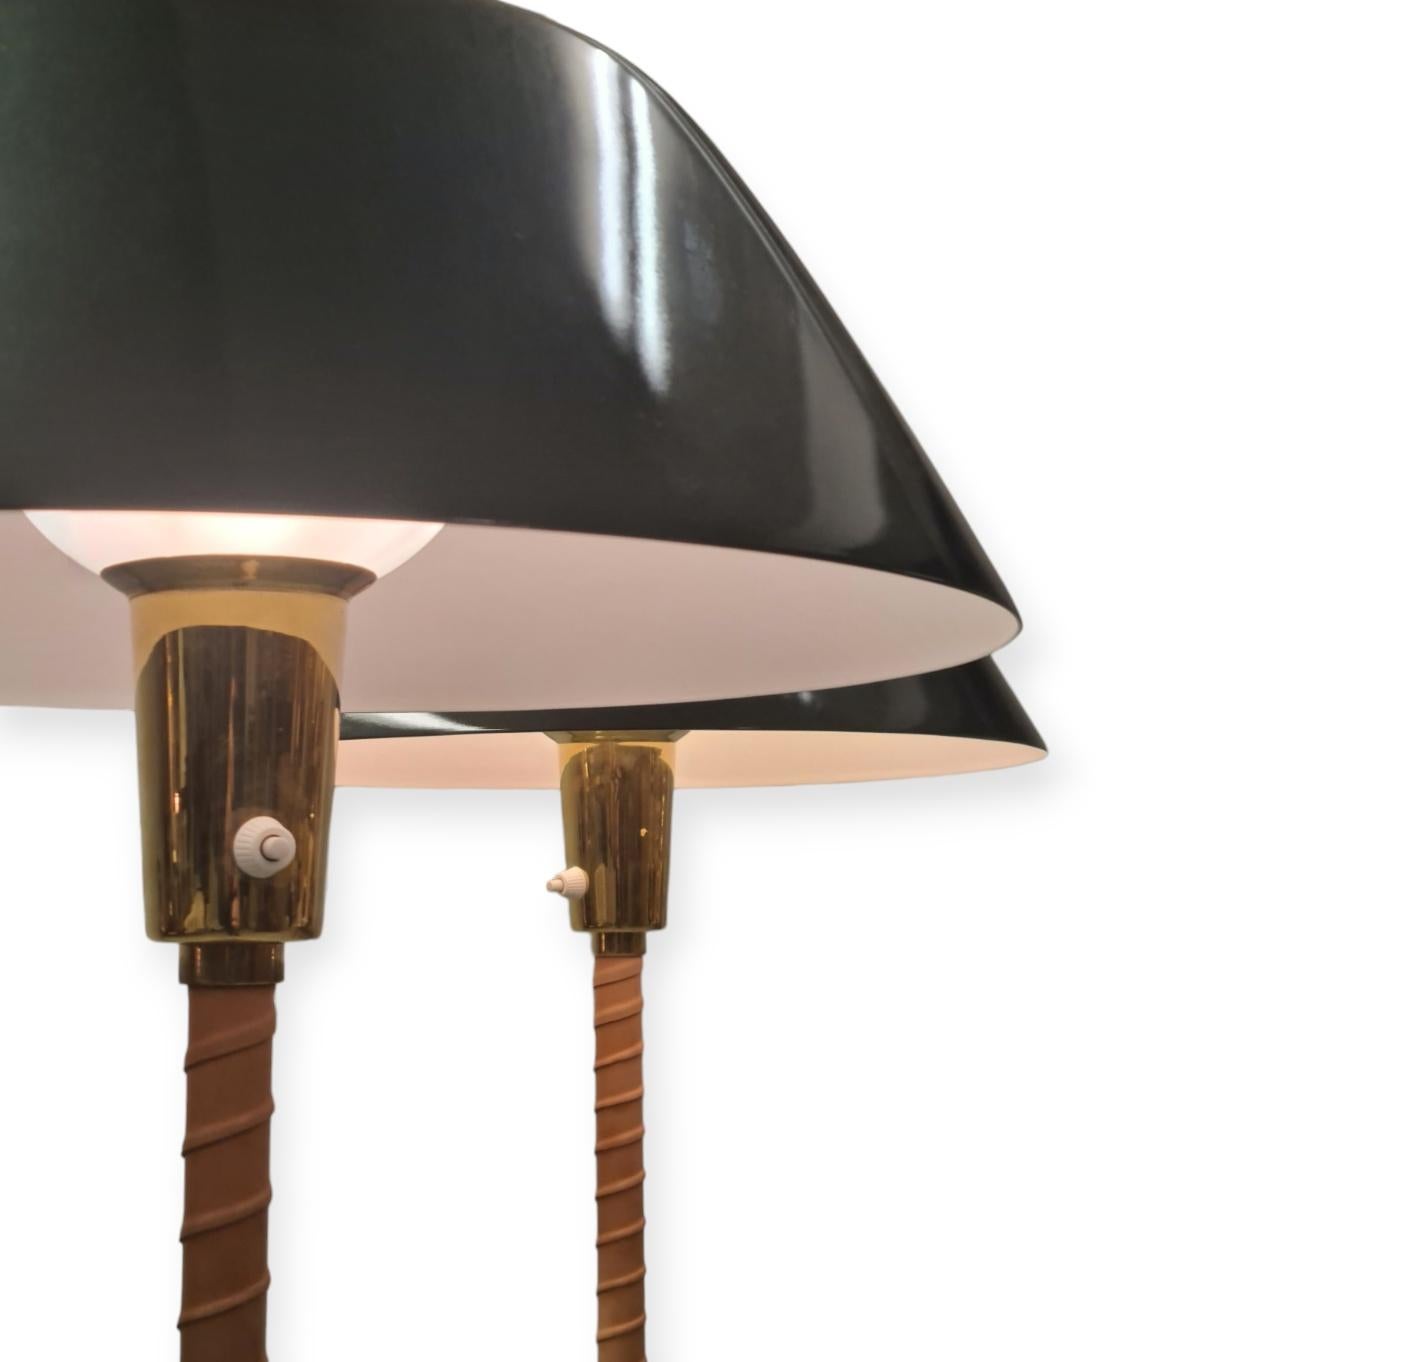 Scandinavian Modern Pair of Lisa Johansson-Papé Ihanne Floor Lamp, Orno for Stockmann 1960s For Sale